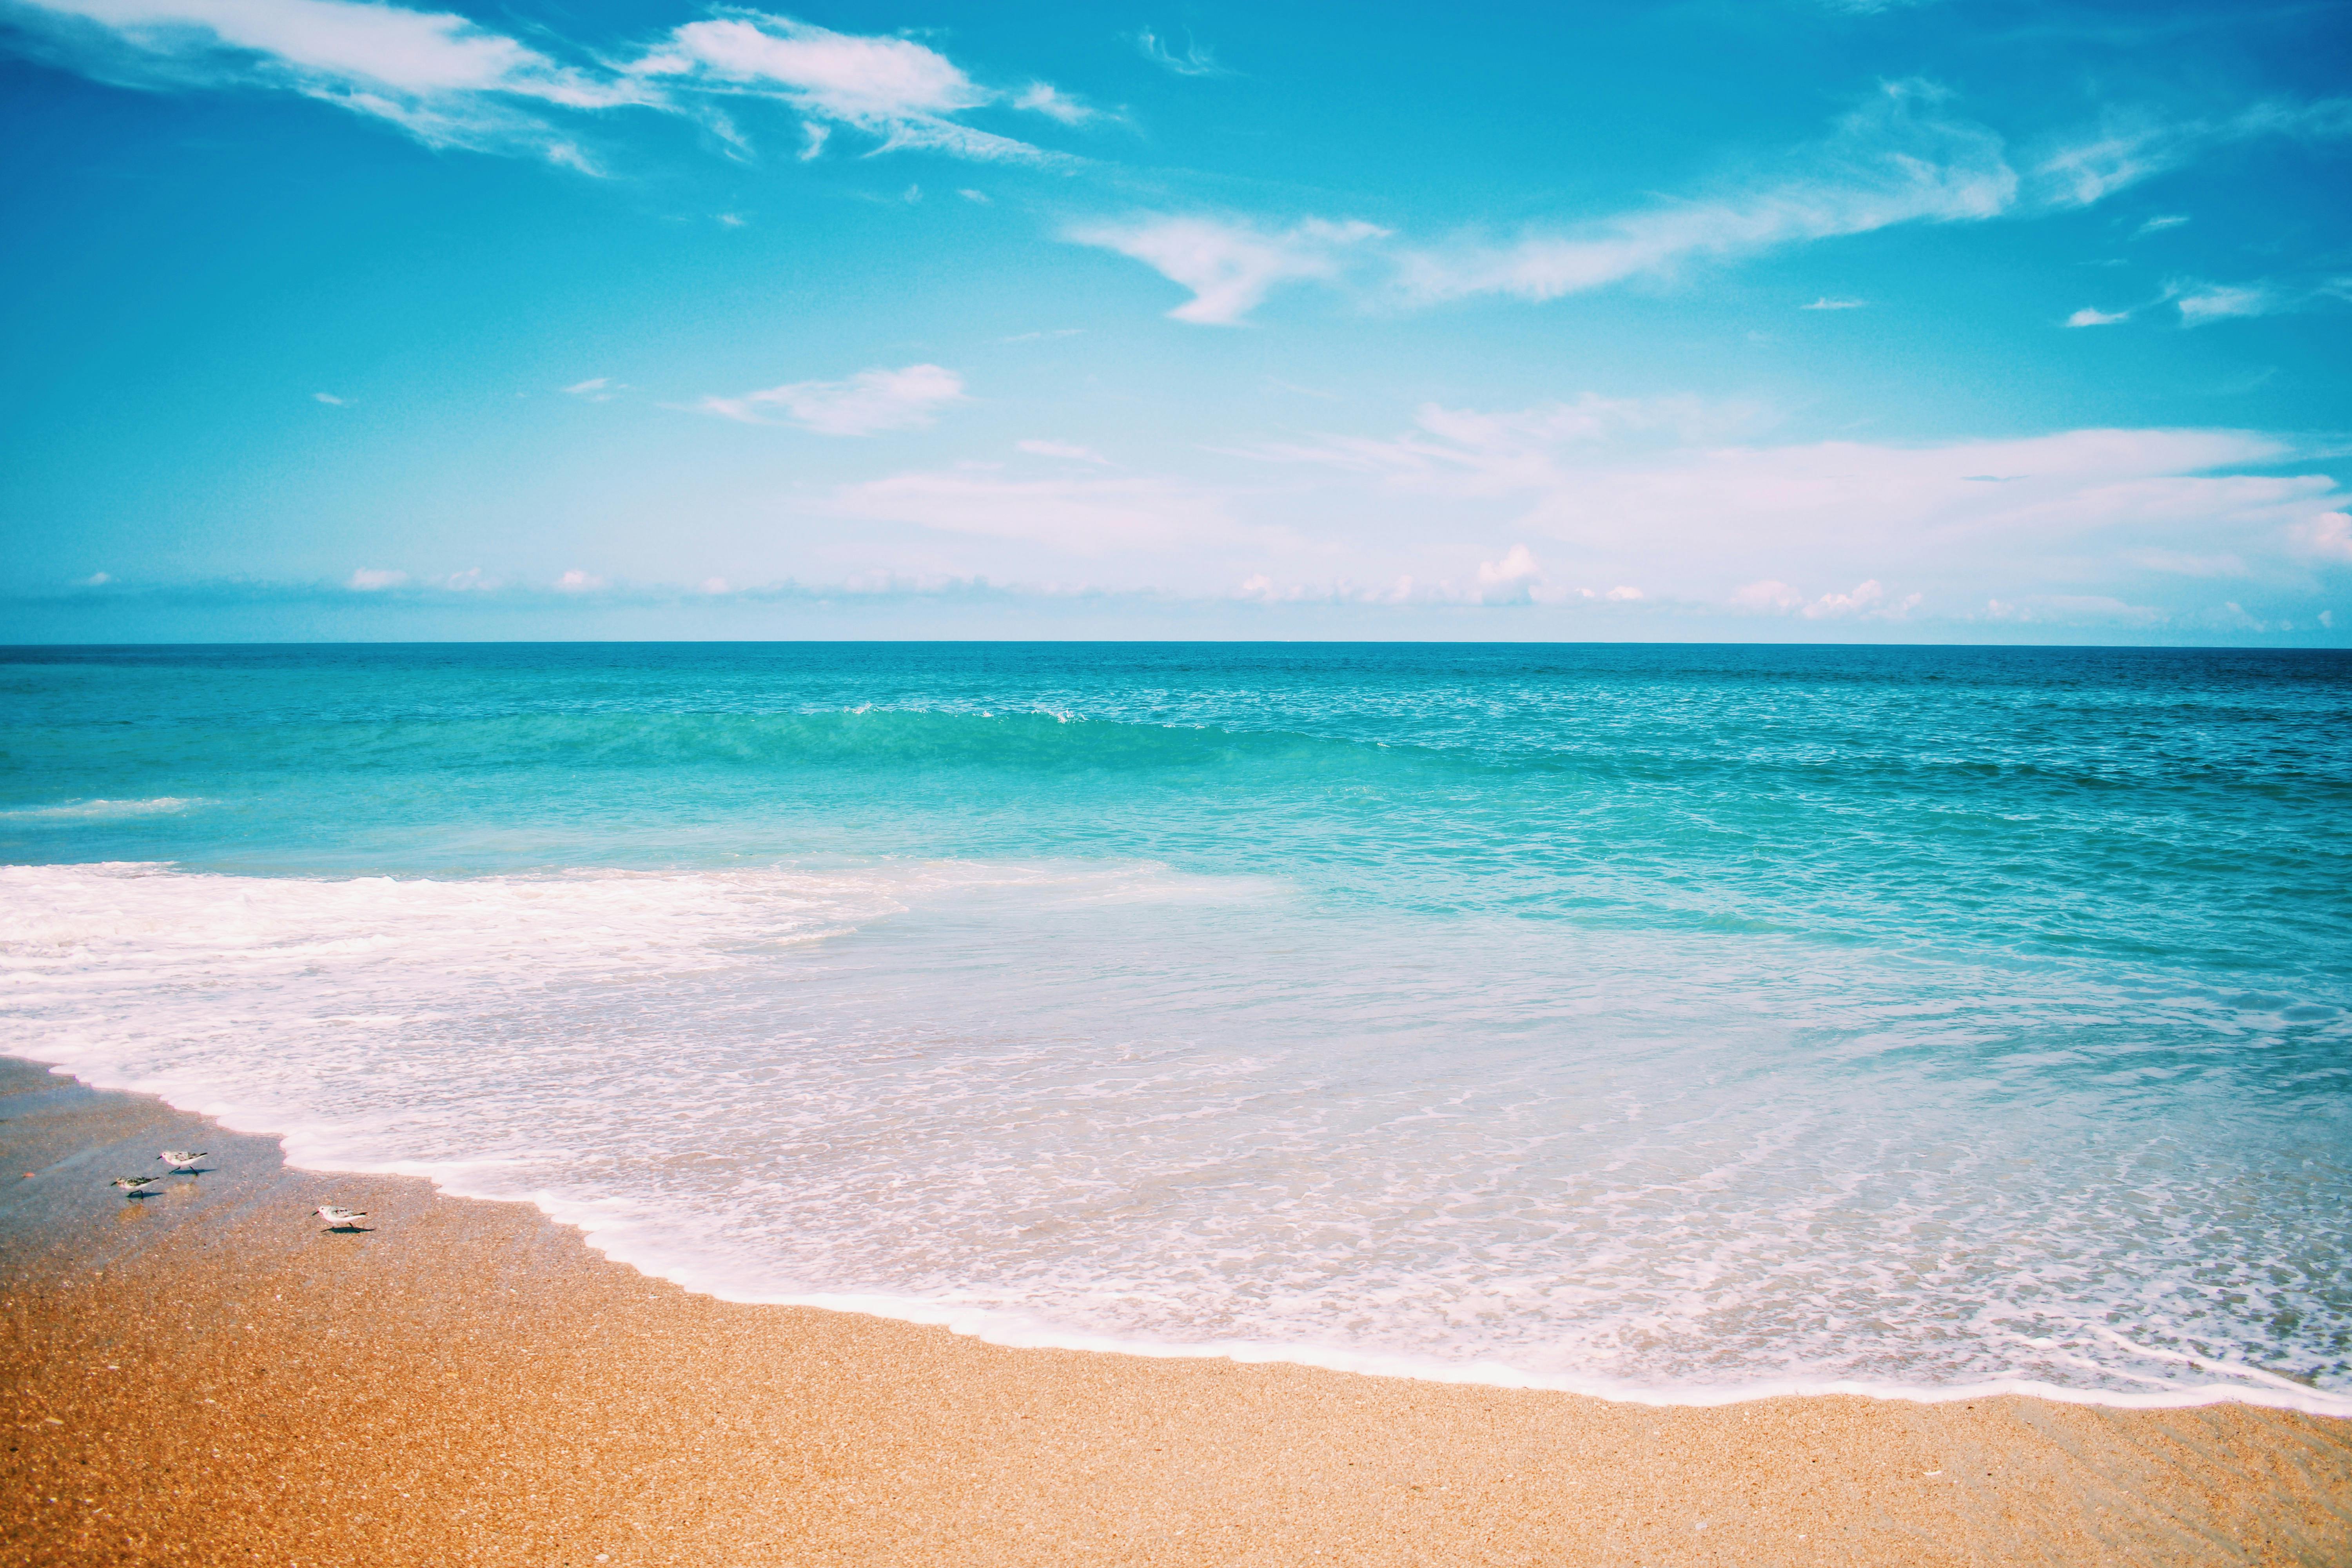 Beach Sand Photos, Download The BEST Free Beach Sand Stock Photos ...